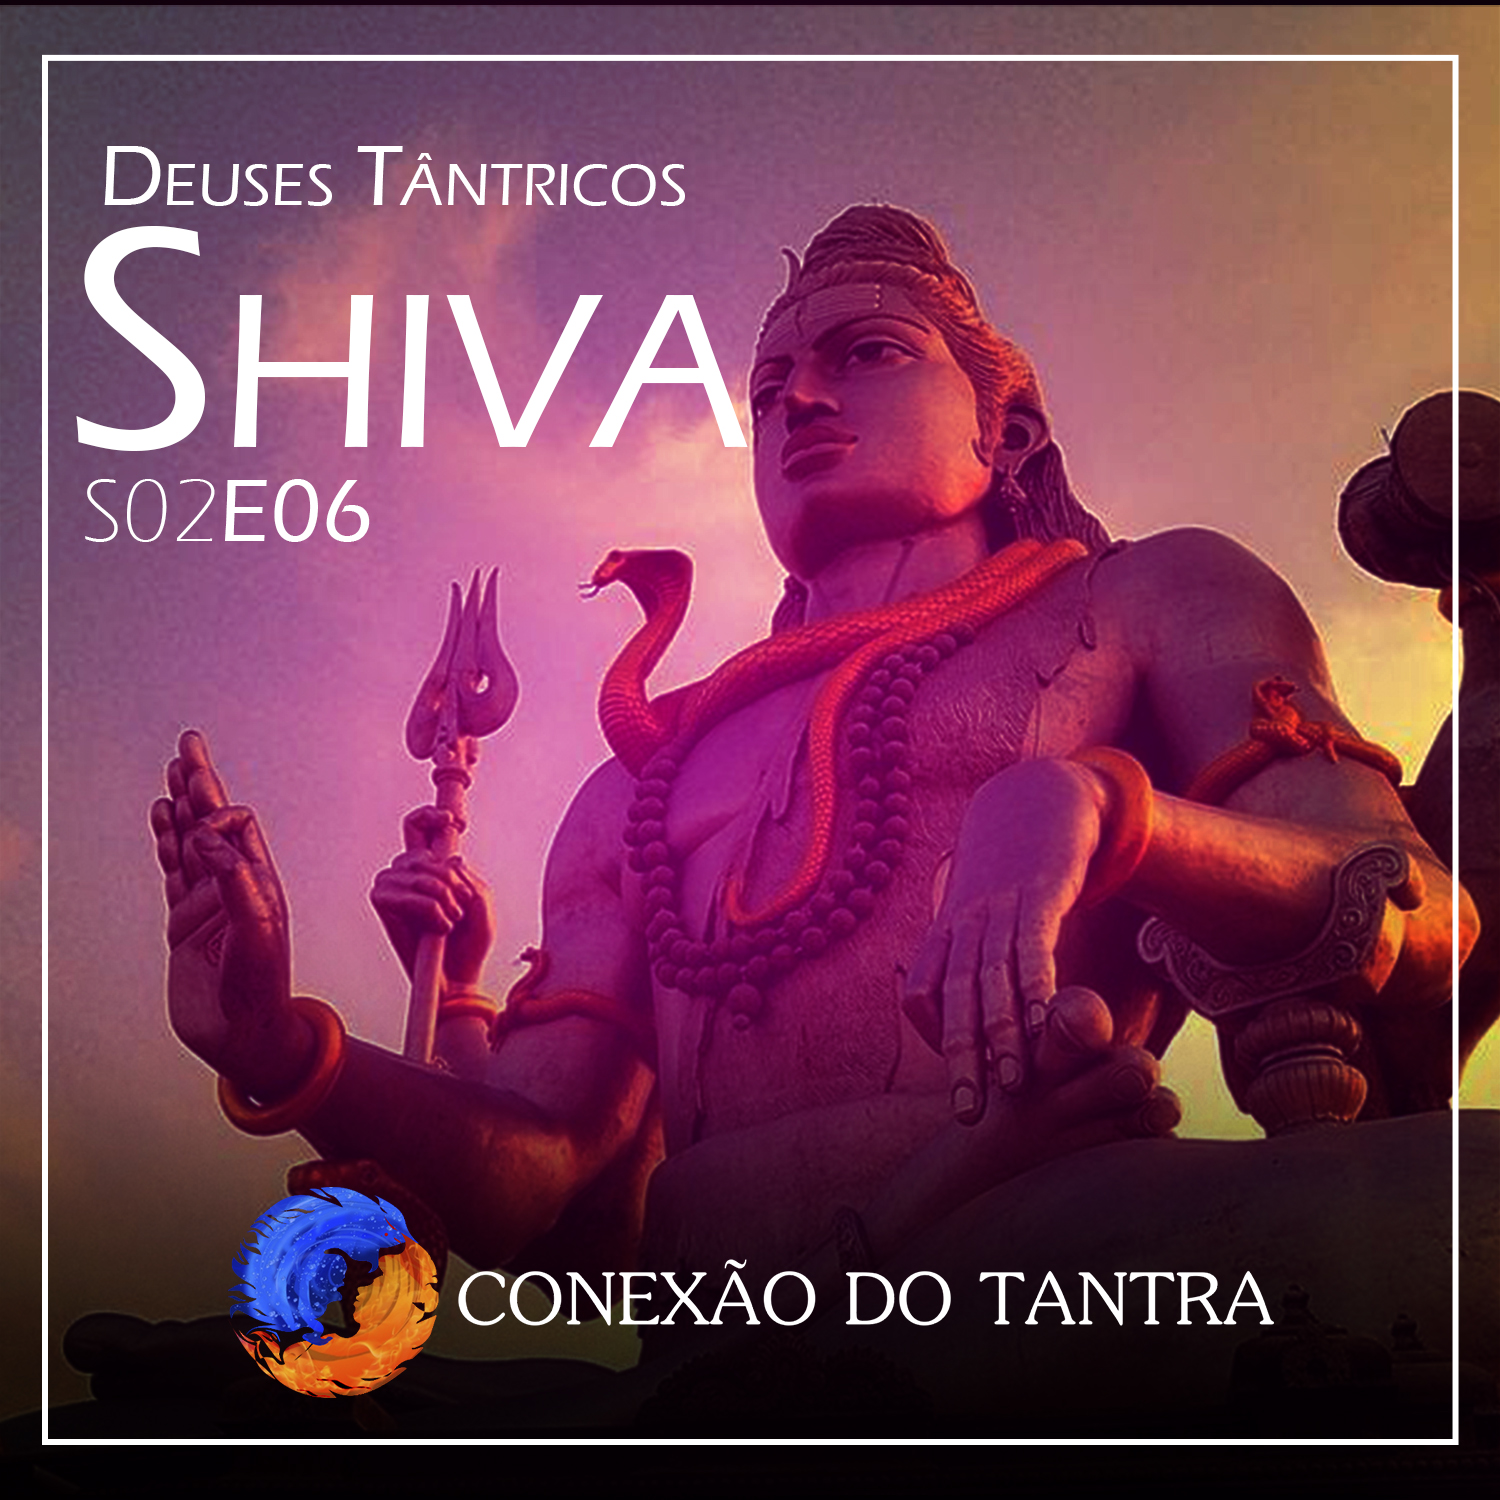 Deuses Tântricos: Shiva post thumbnail image